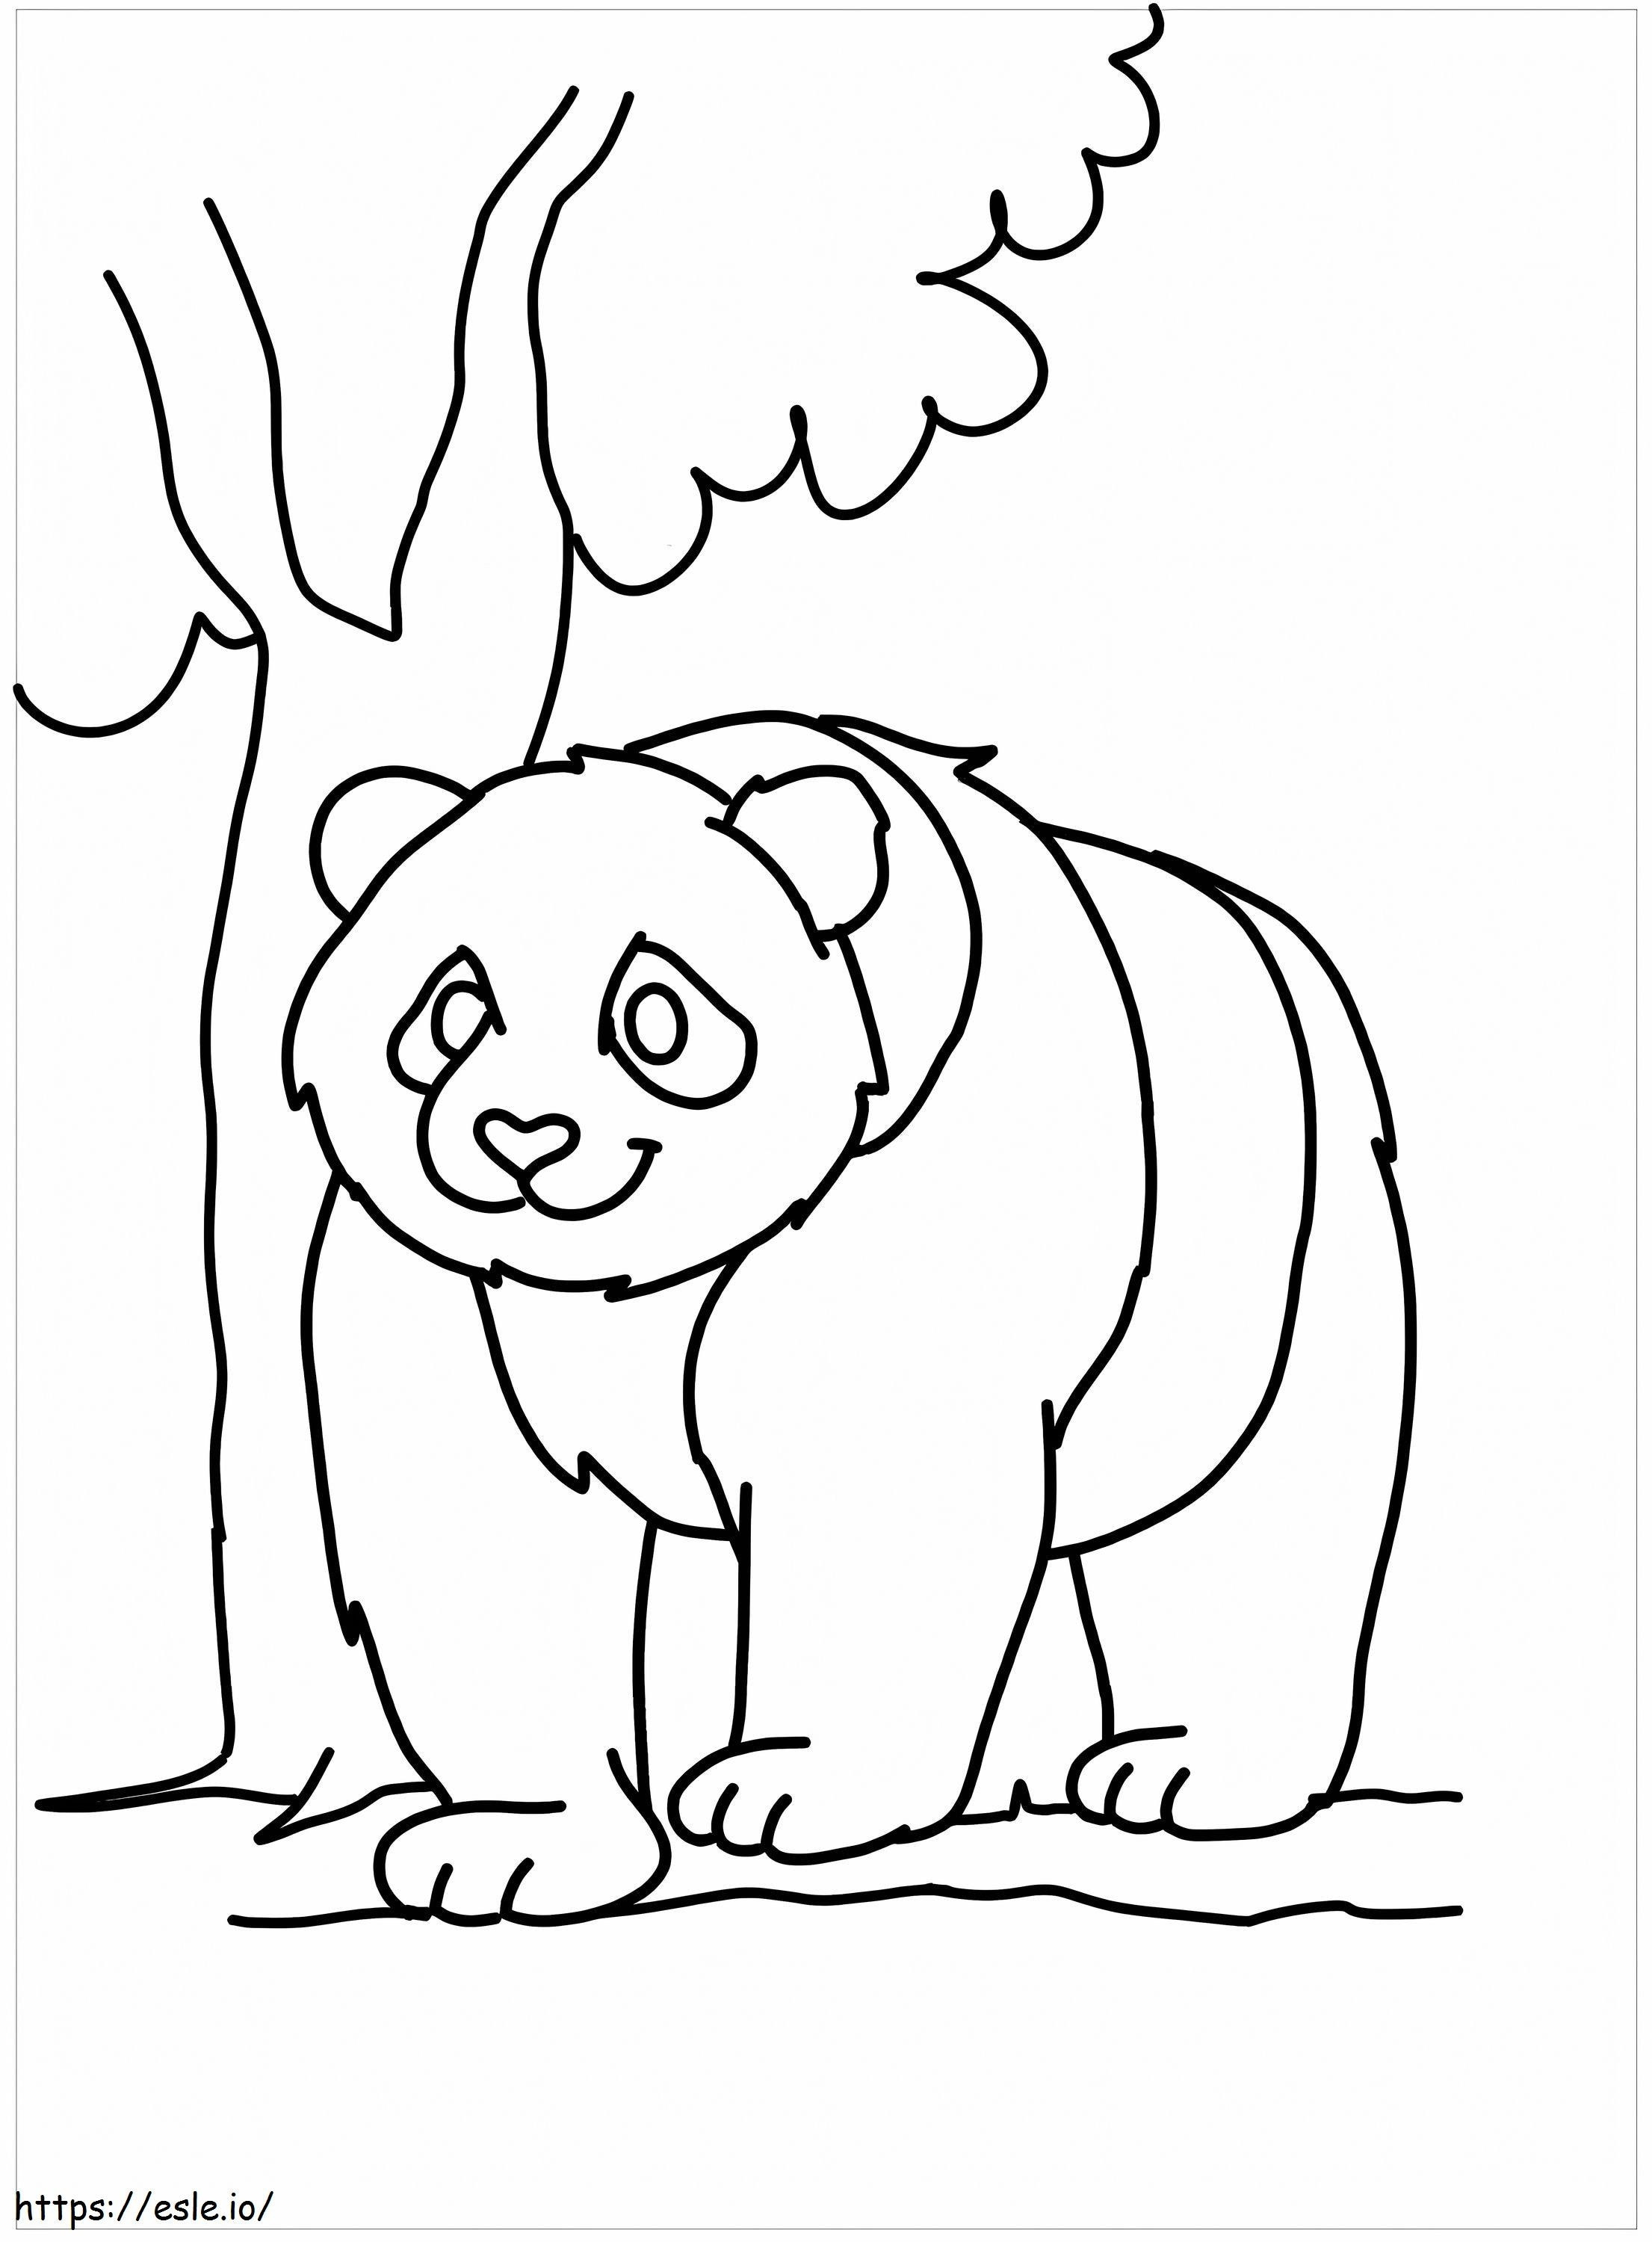 Giant Panda coloring page